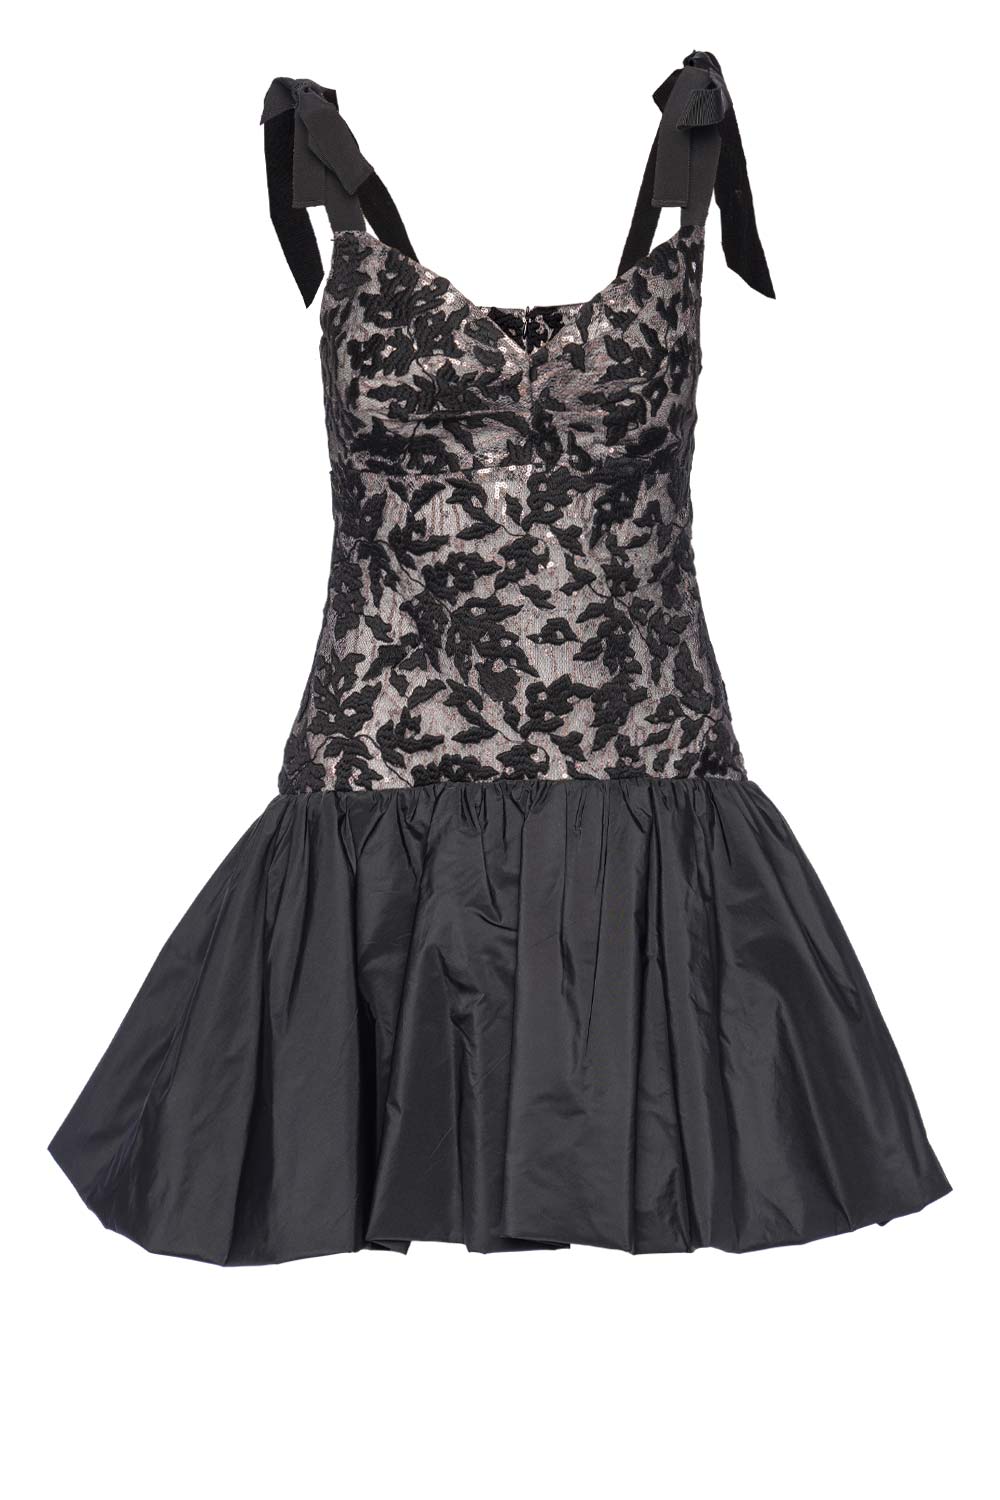 Silvia Tcherassi Marguerite Black Mini Dress